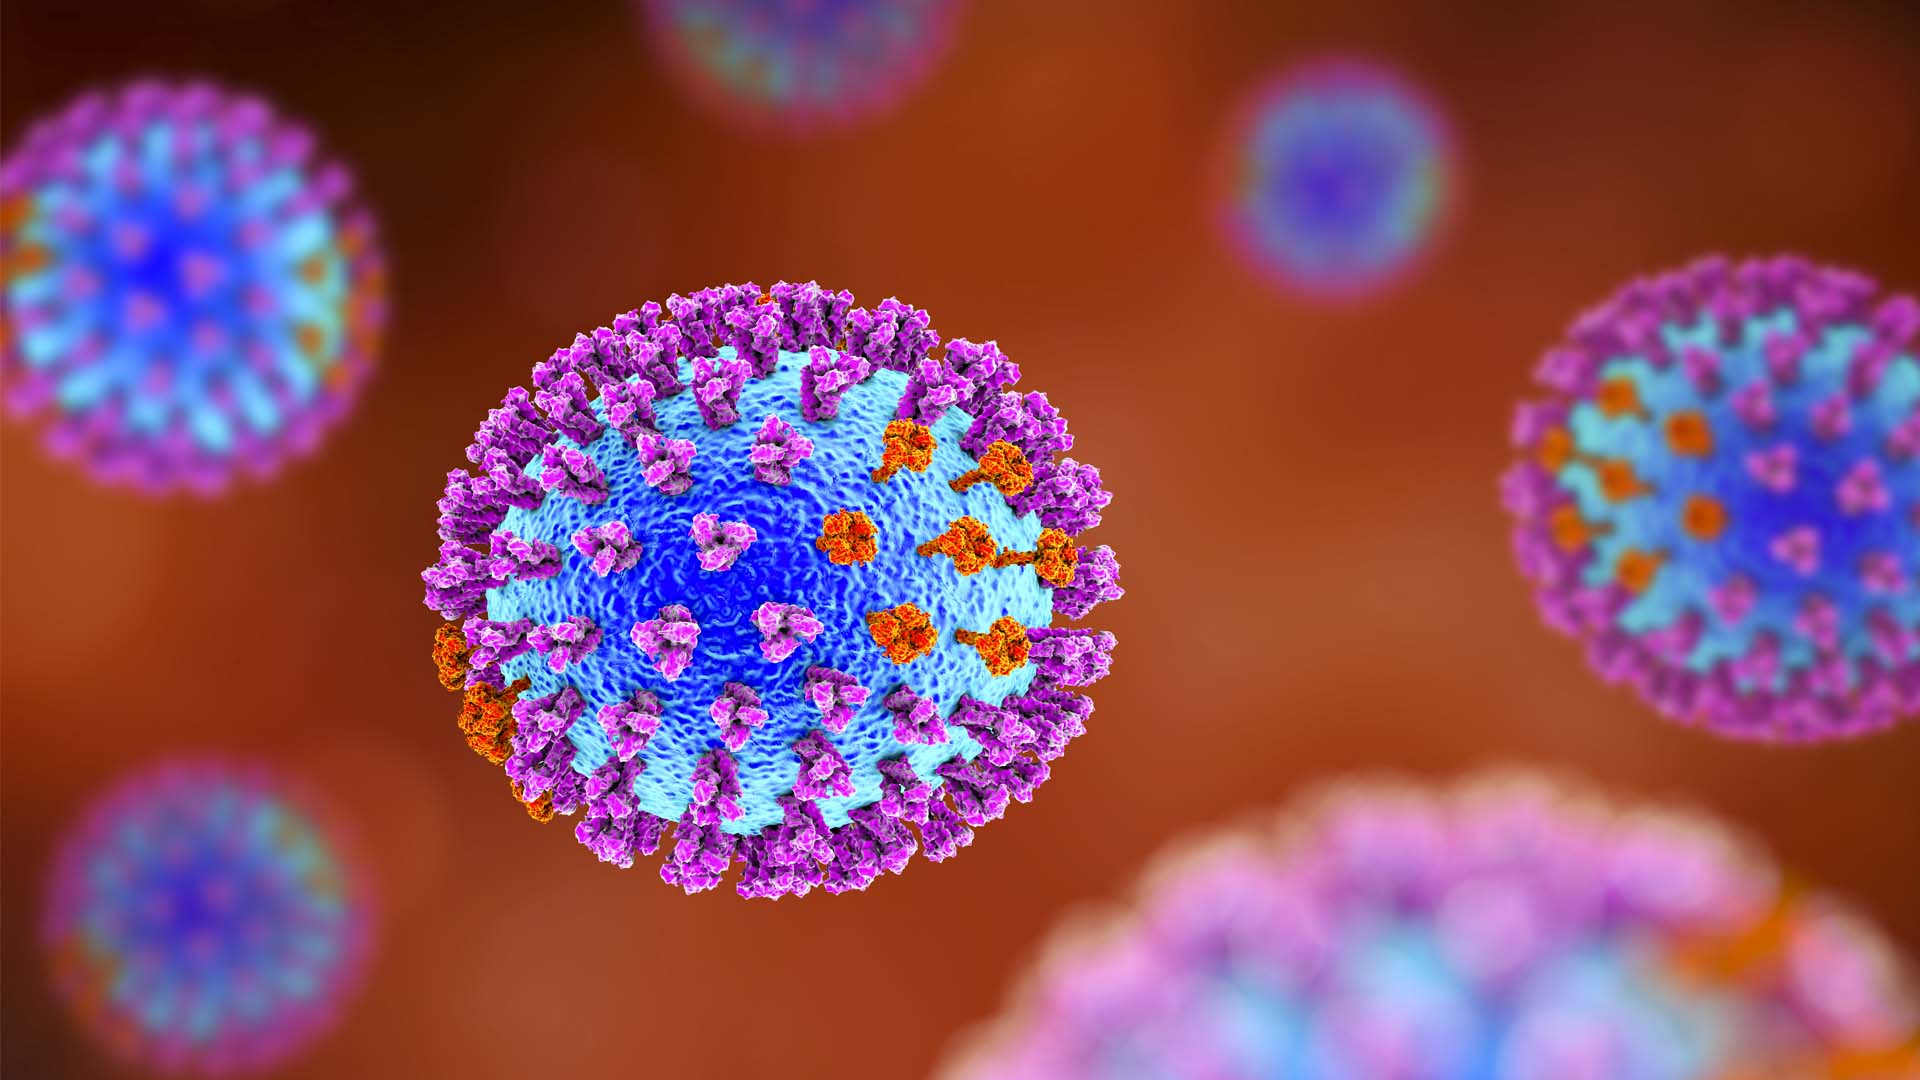 Generating More Effective Vaccines Against Viruses